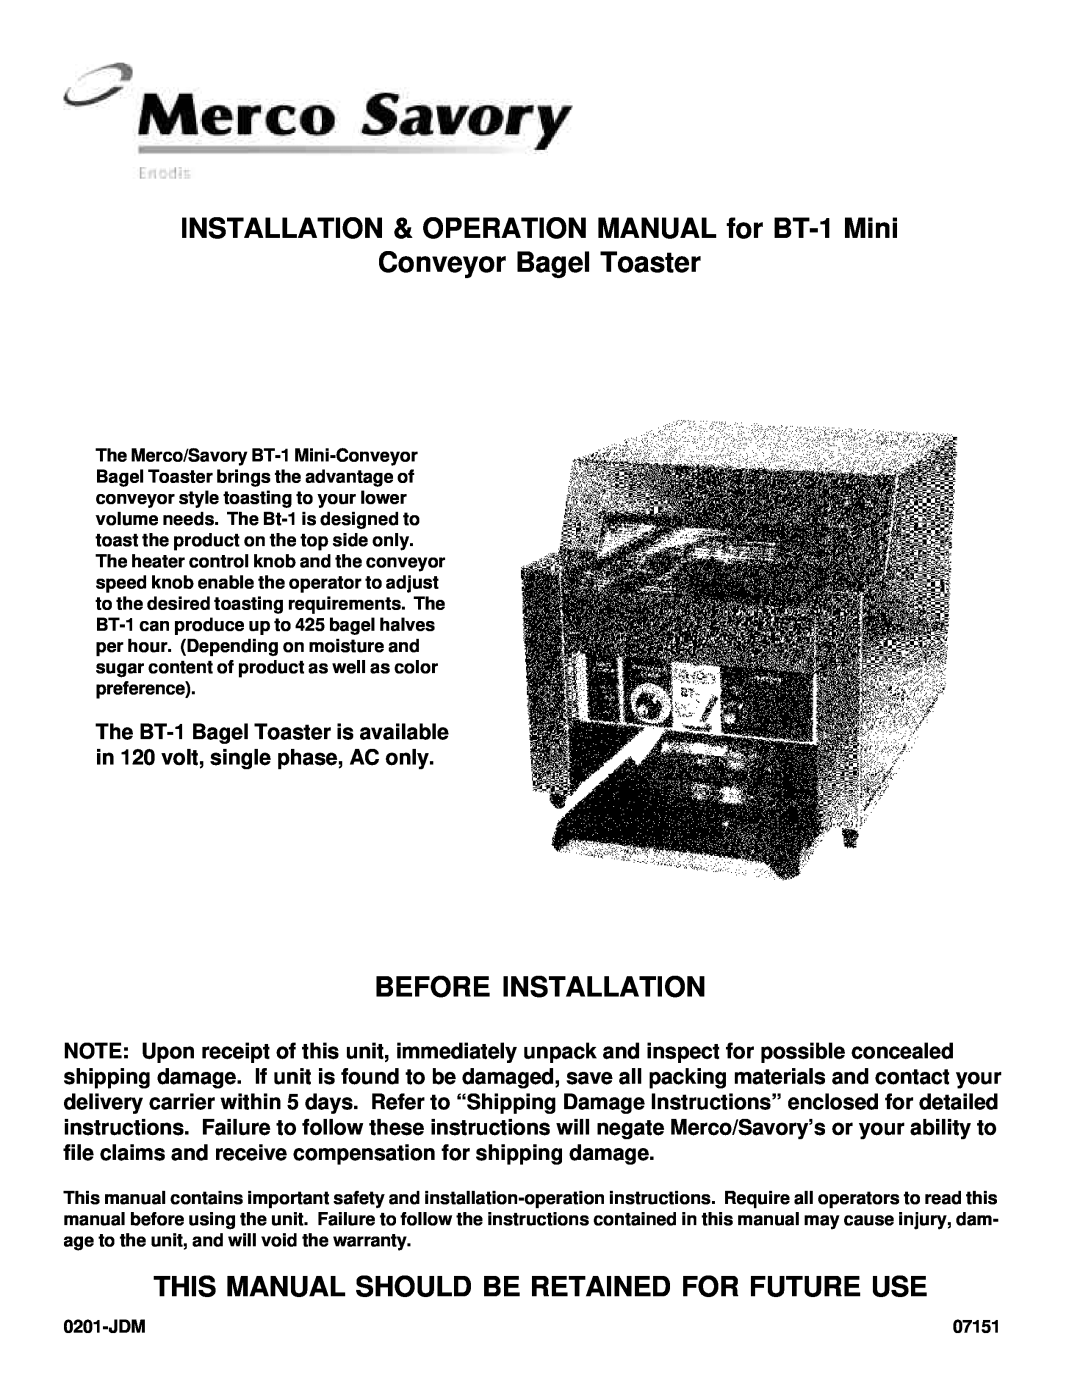 Merco Savory BT-1 operation manual Conveyor Bagel Toaster, Before Installation 